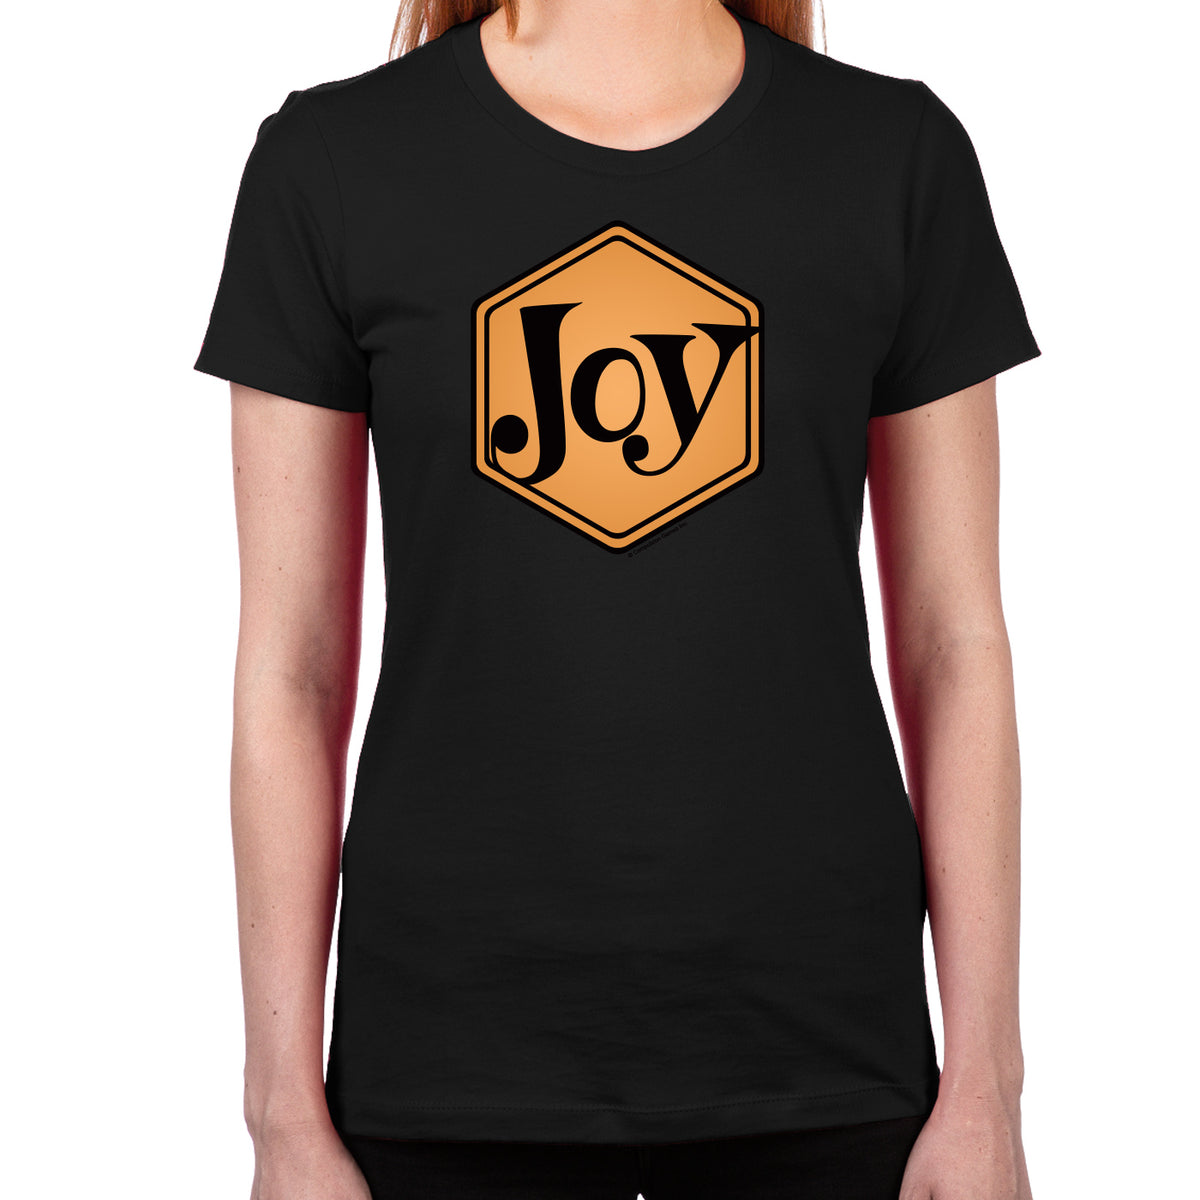 Joy Women's Fitted T-Shirt